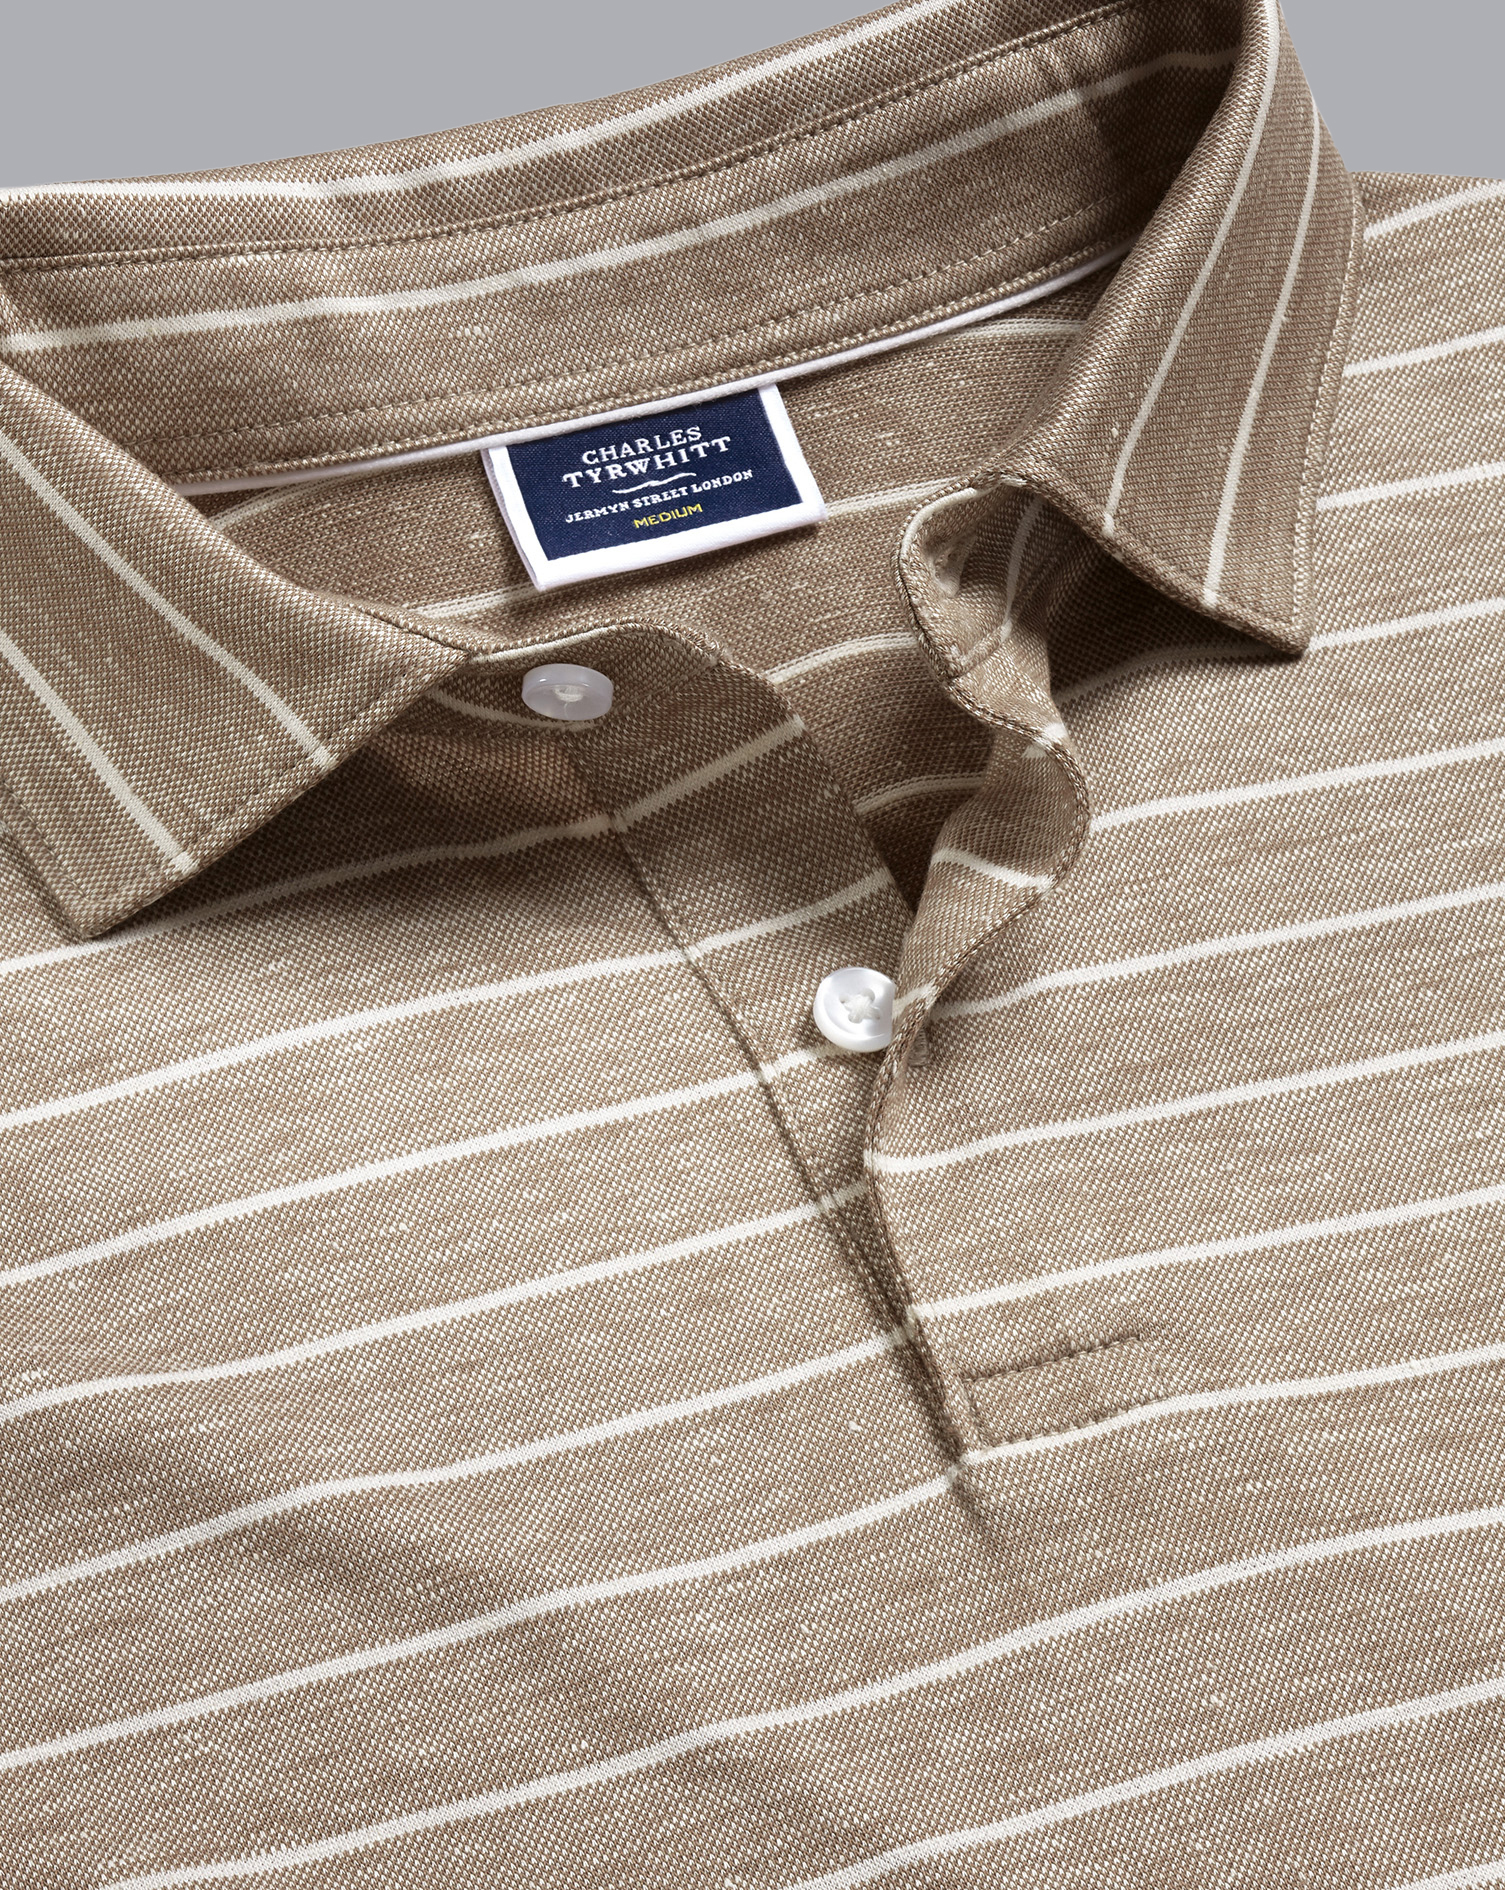 Men's Charles Tyrwhitt Linen Cotton Stripe Polo Shirt - Mocha Brown Size Small Cotton/Linen
